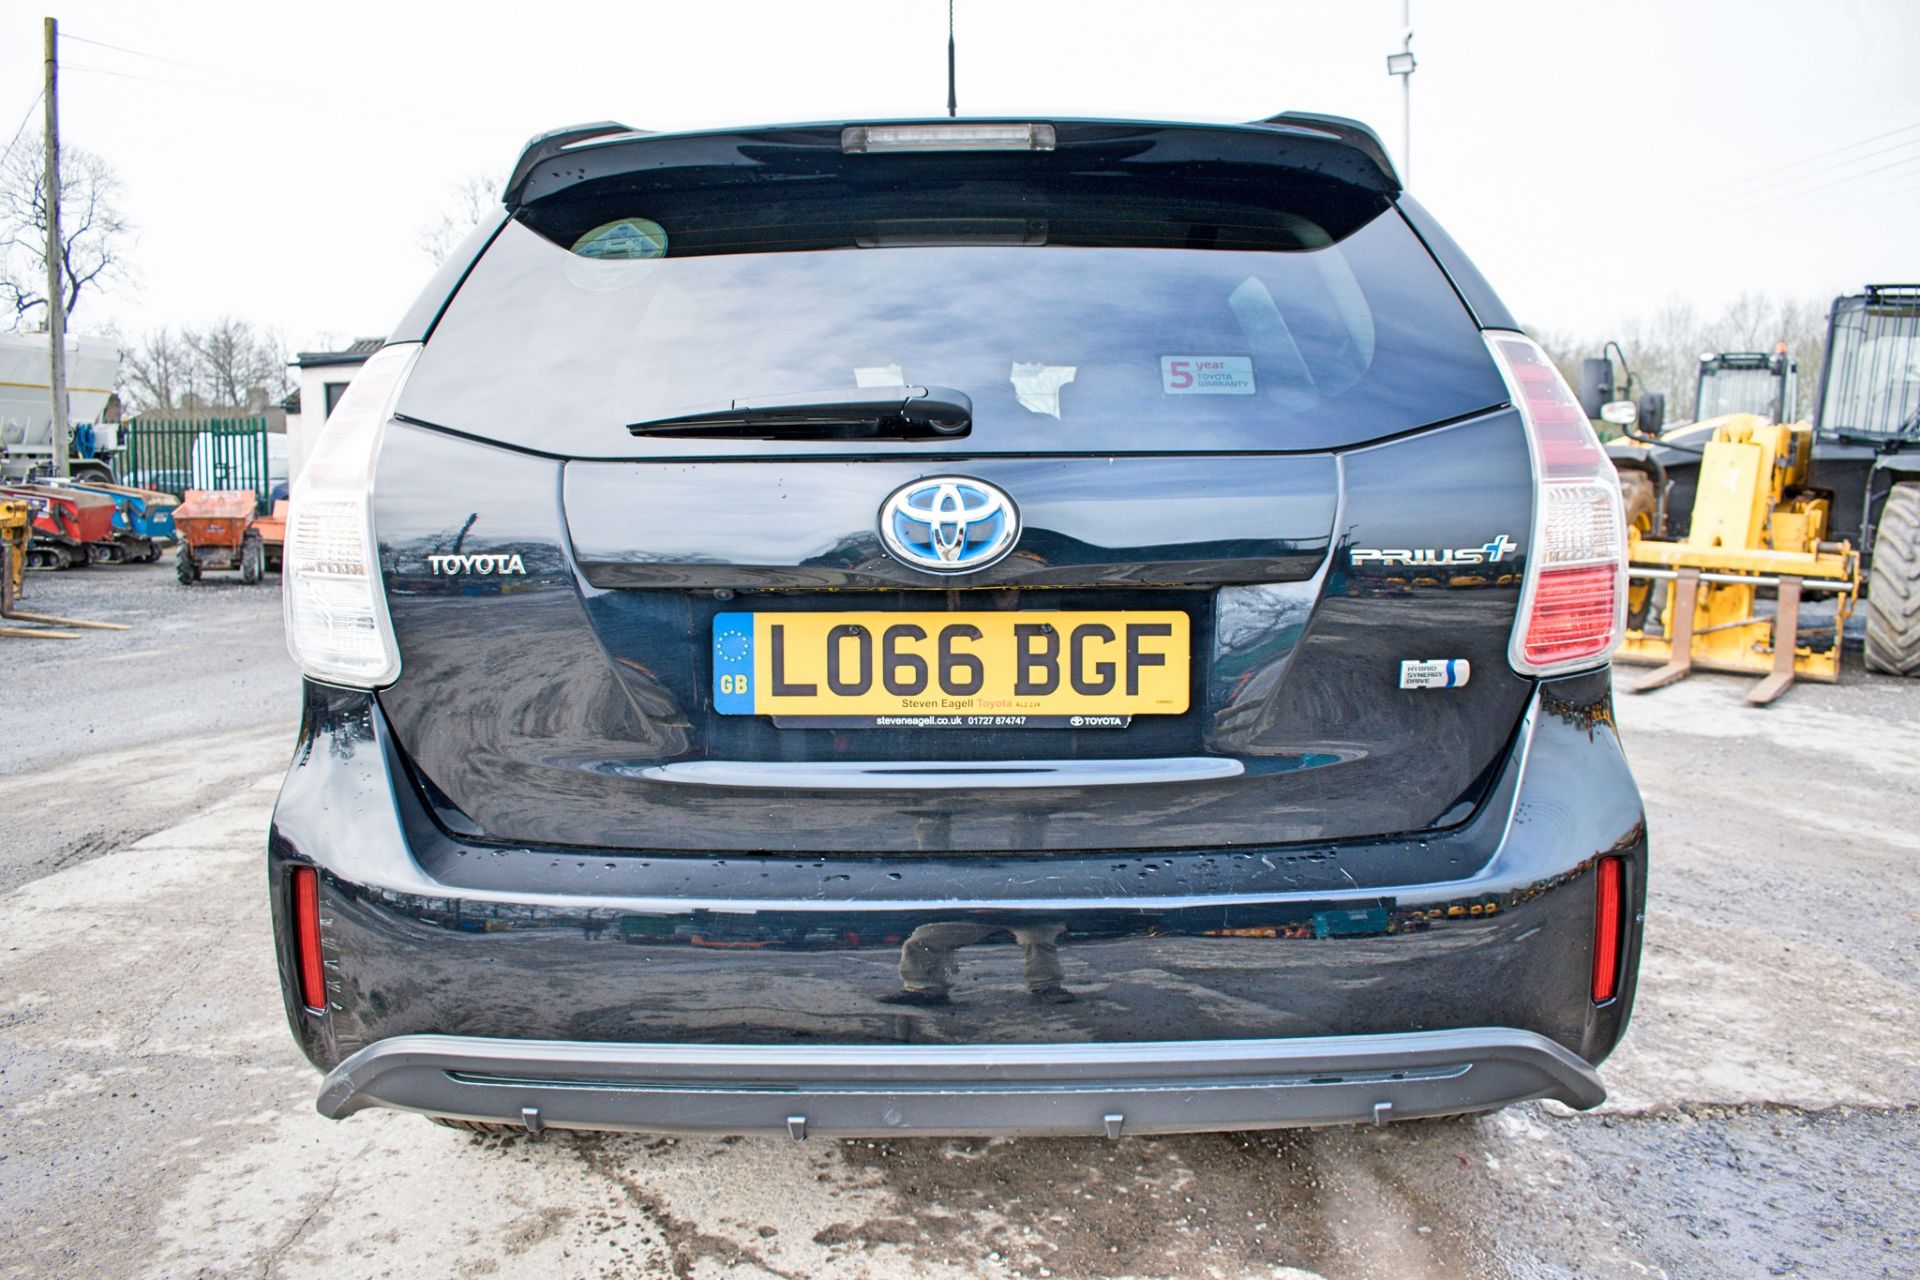 Toyota Prius Icon CVT Hybrid 5 door hatchback car Registration Number: LO66 BGF Date of - Image 6 of 13